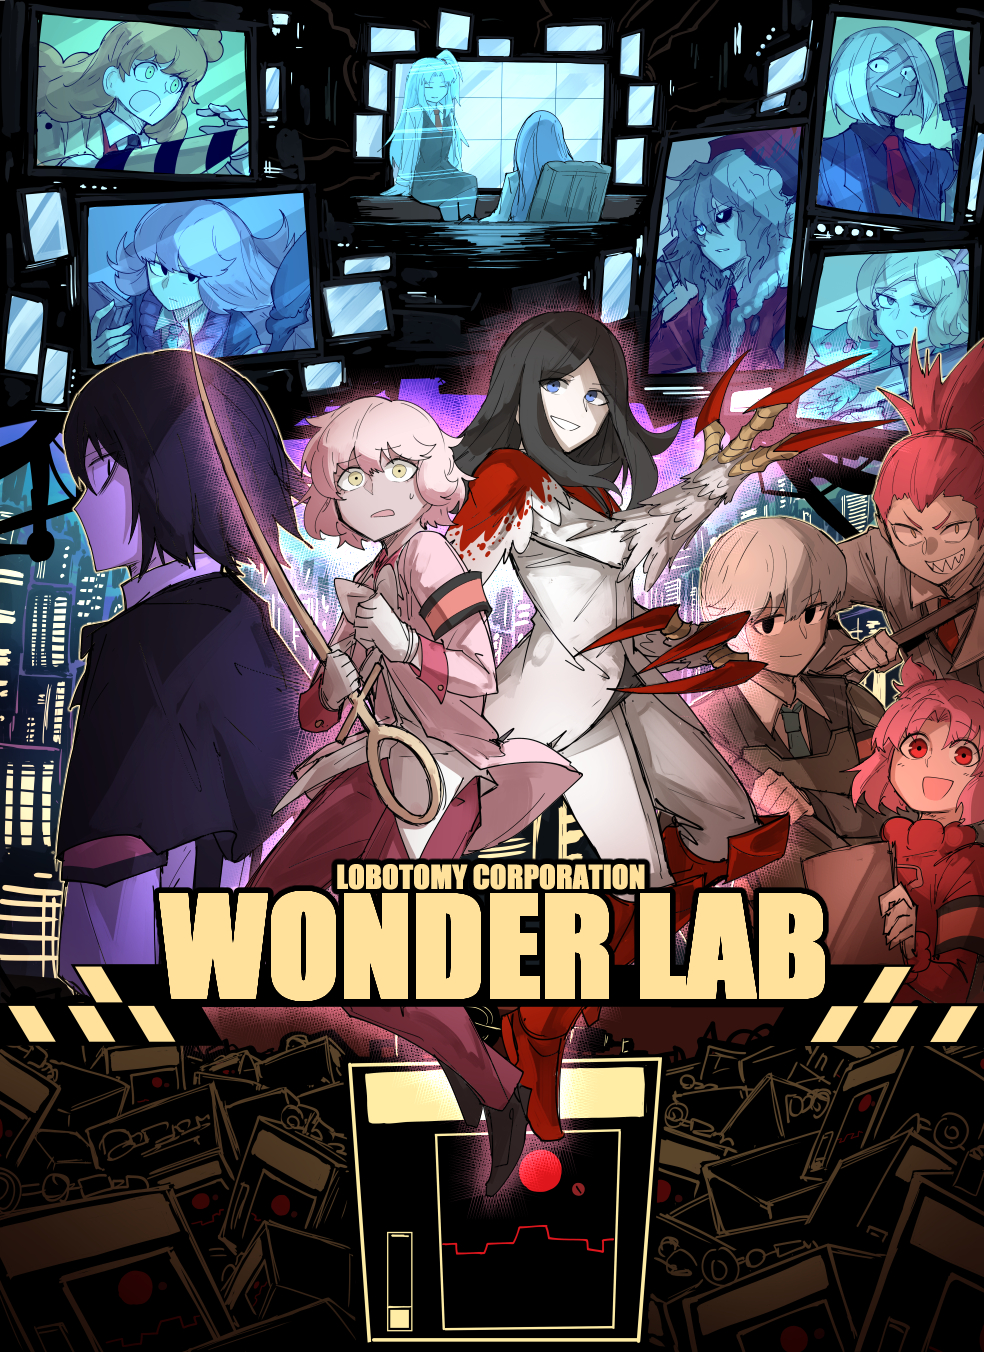 WONDERLAB-Wonderlabワンダーラボ